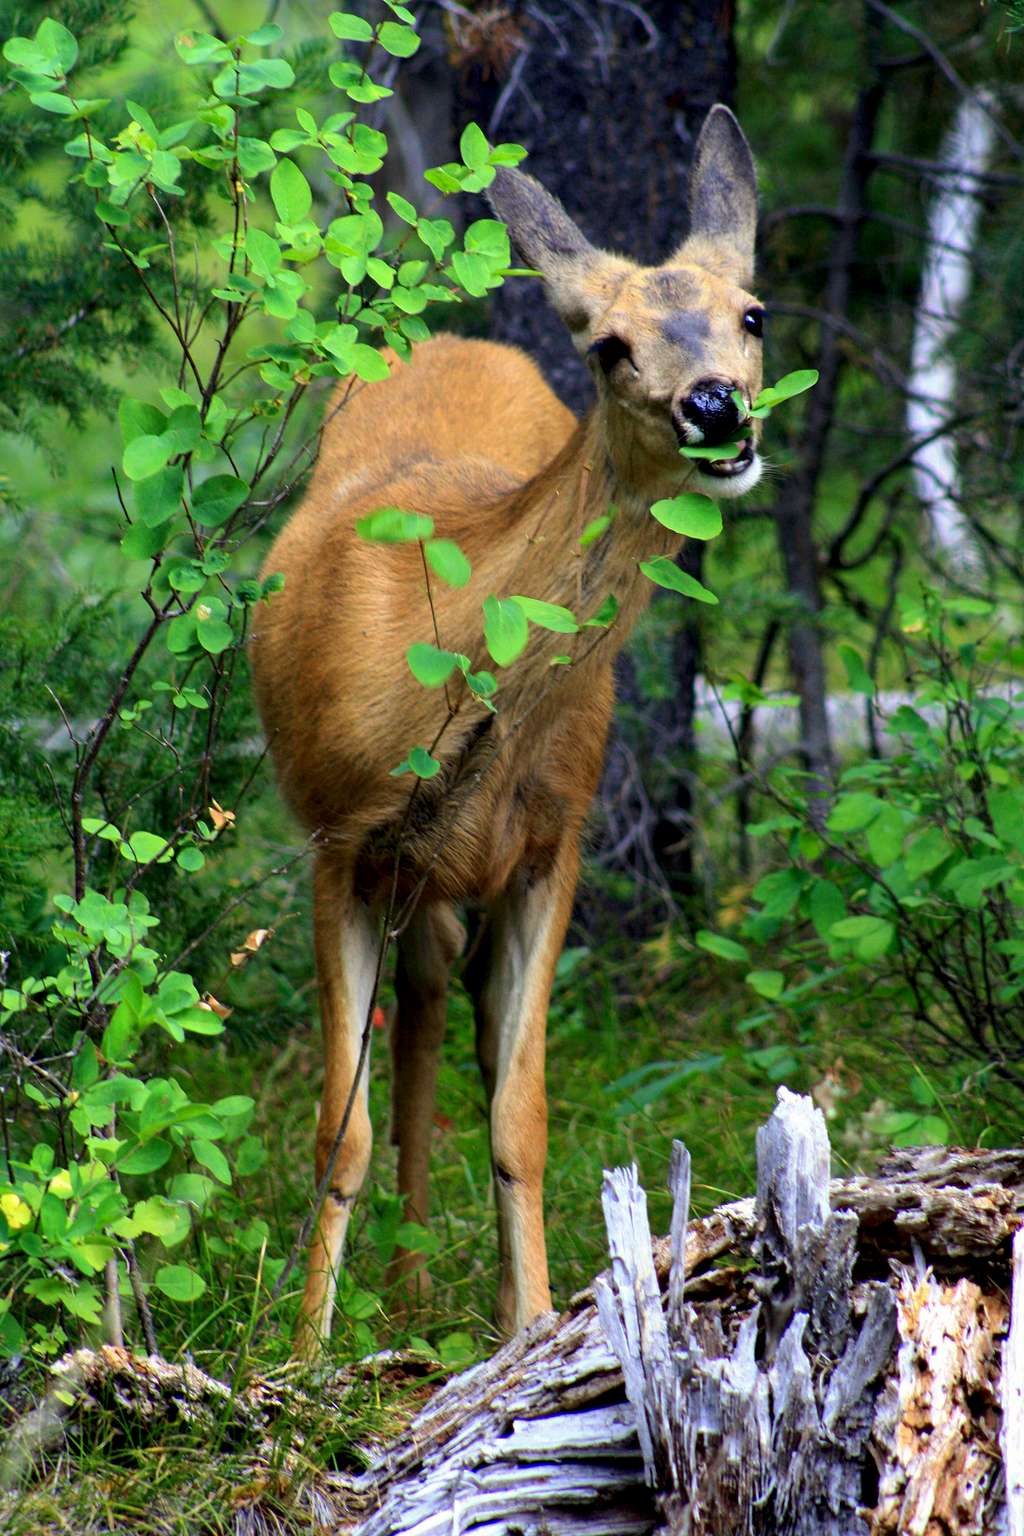 A Deer Up Close